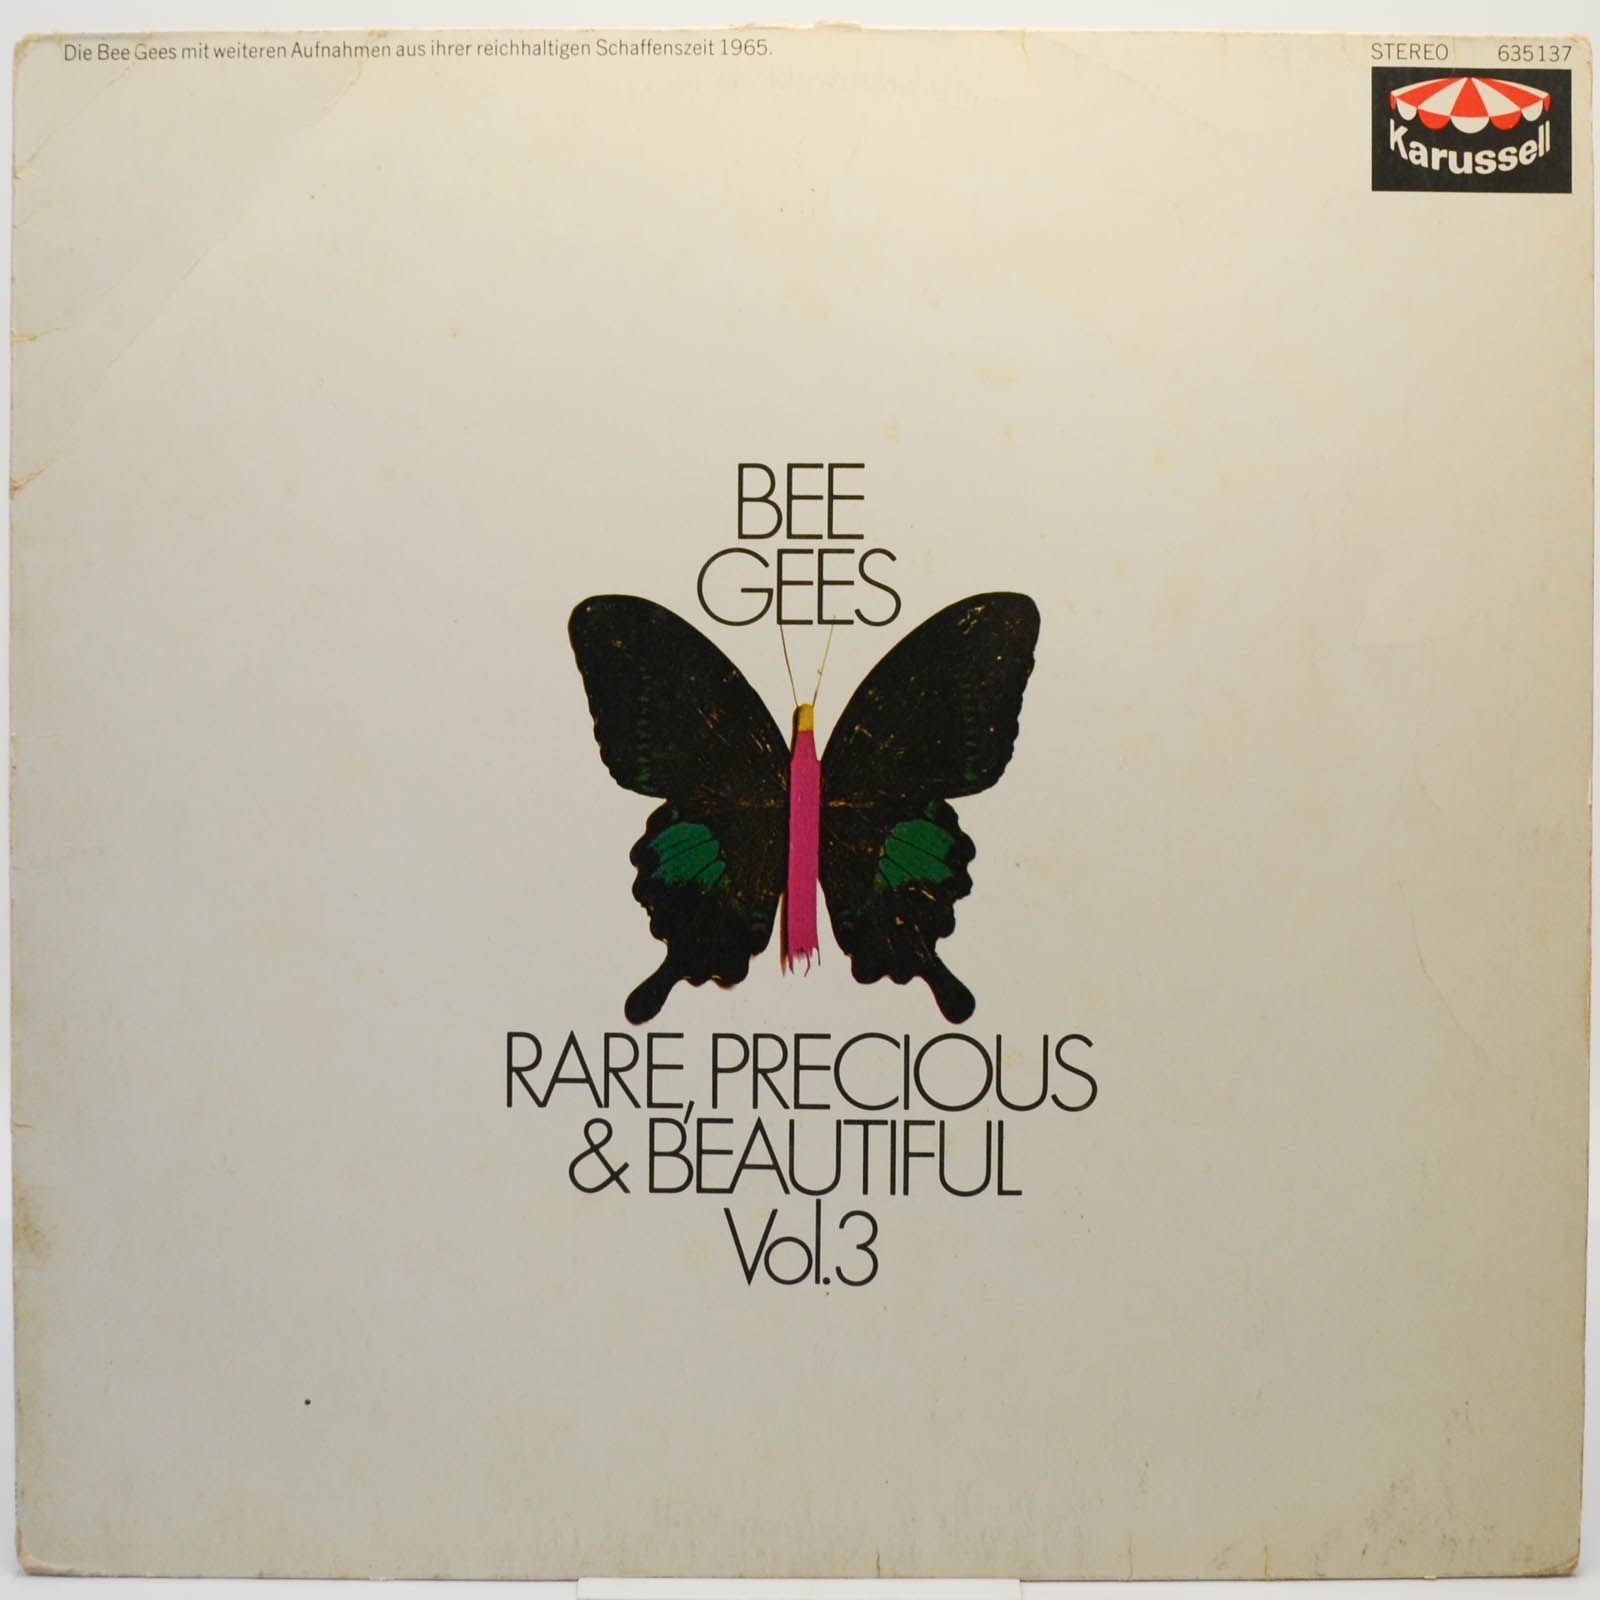 Bee Gees — Rare, Precious & Beautiful Vol. 3, 1969